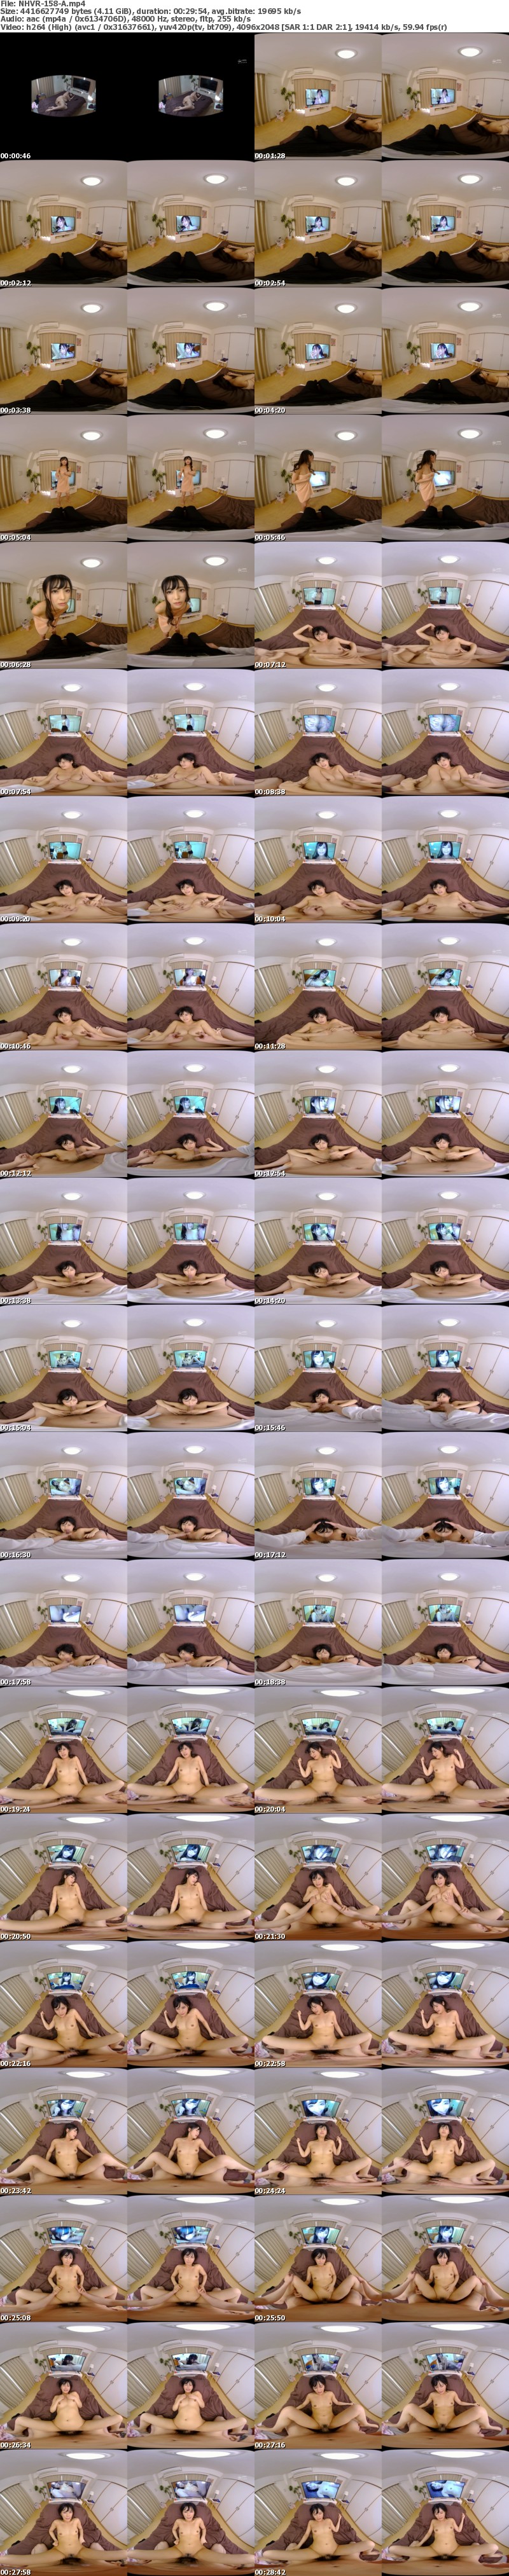 (VR) NHVR-158 自宅不倫していた嫁の浮気ビデオを見せつけながら嫌がる嫁に連続中出し 久留木玲